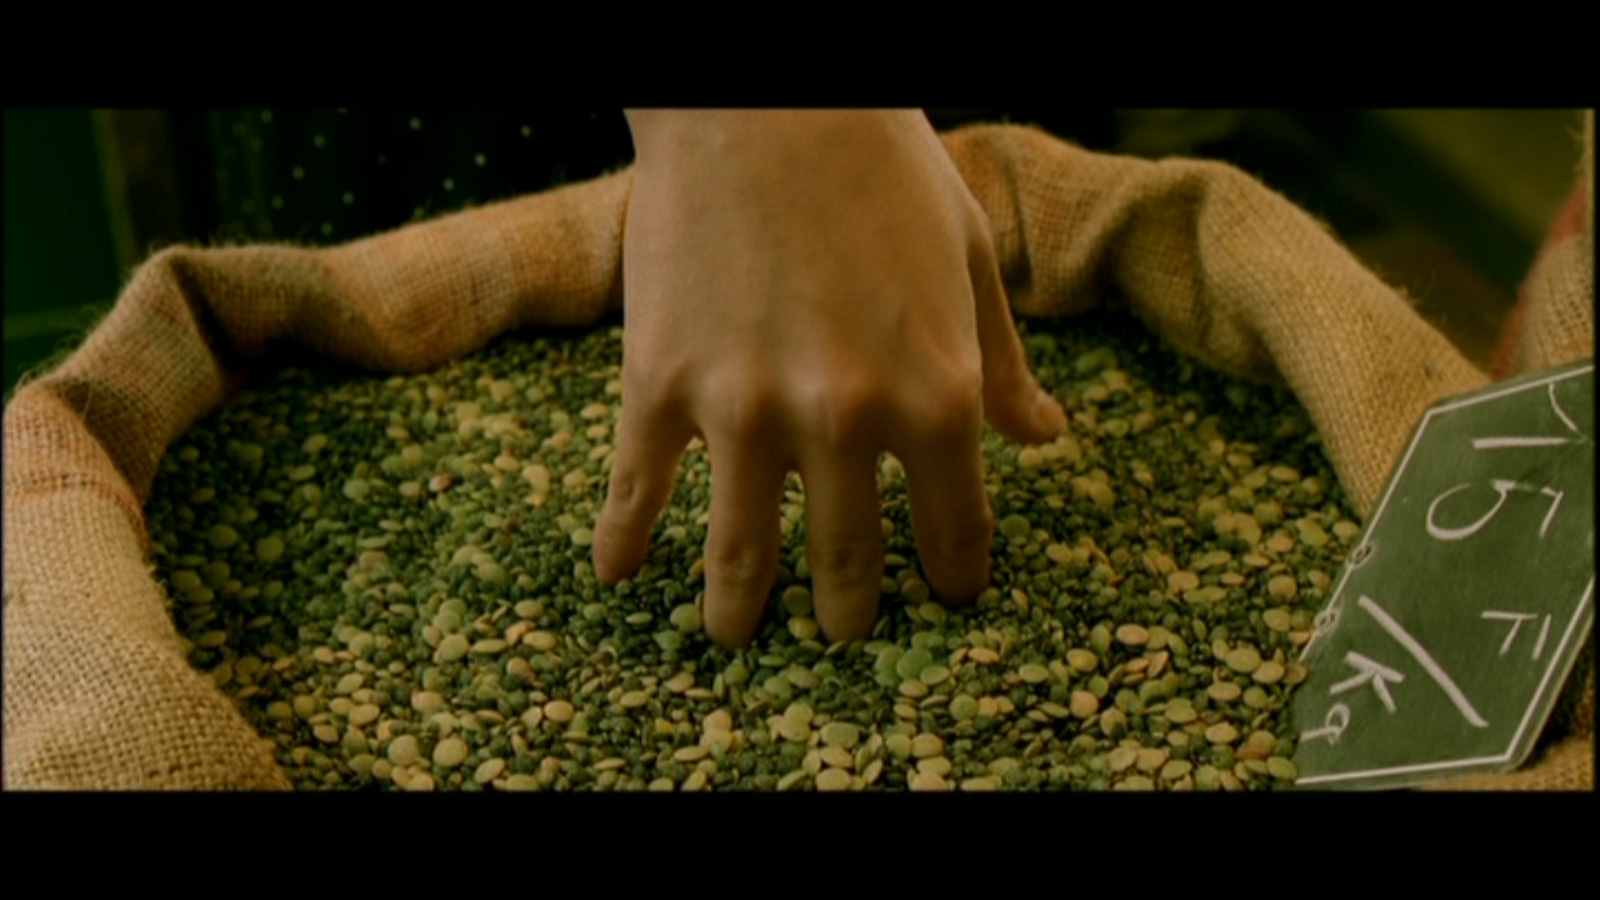 Amélie's fingers in the grain